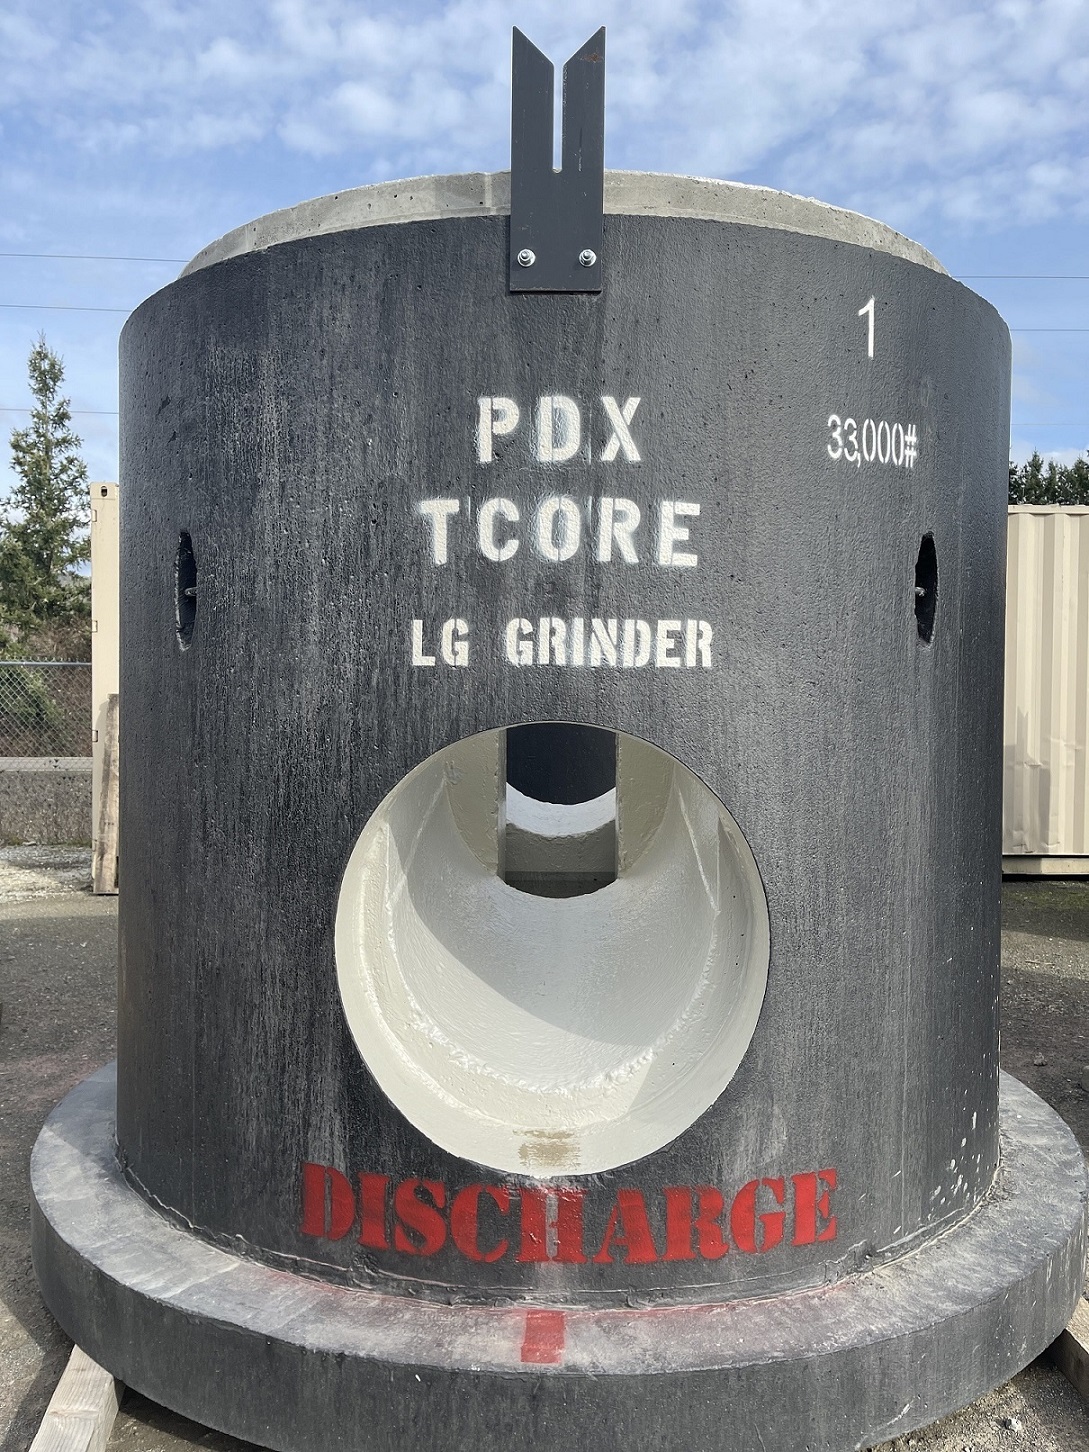 PDX TCore LG Grinder